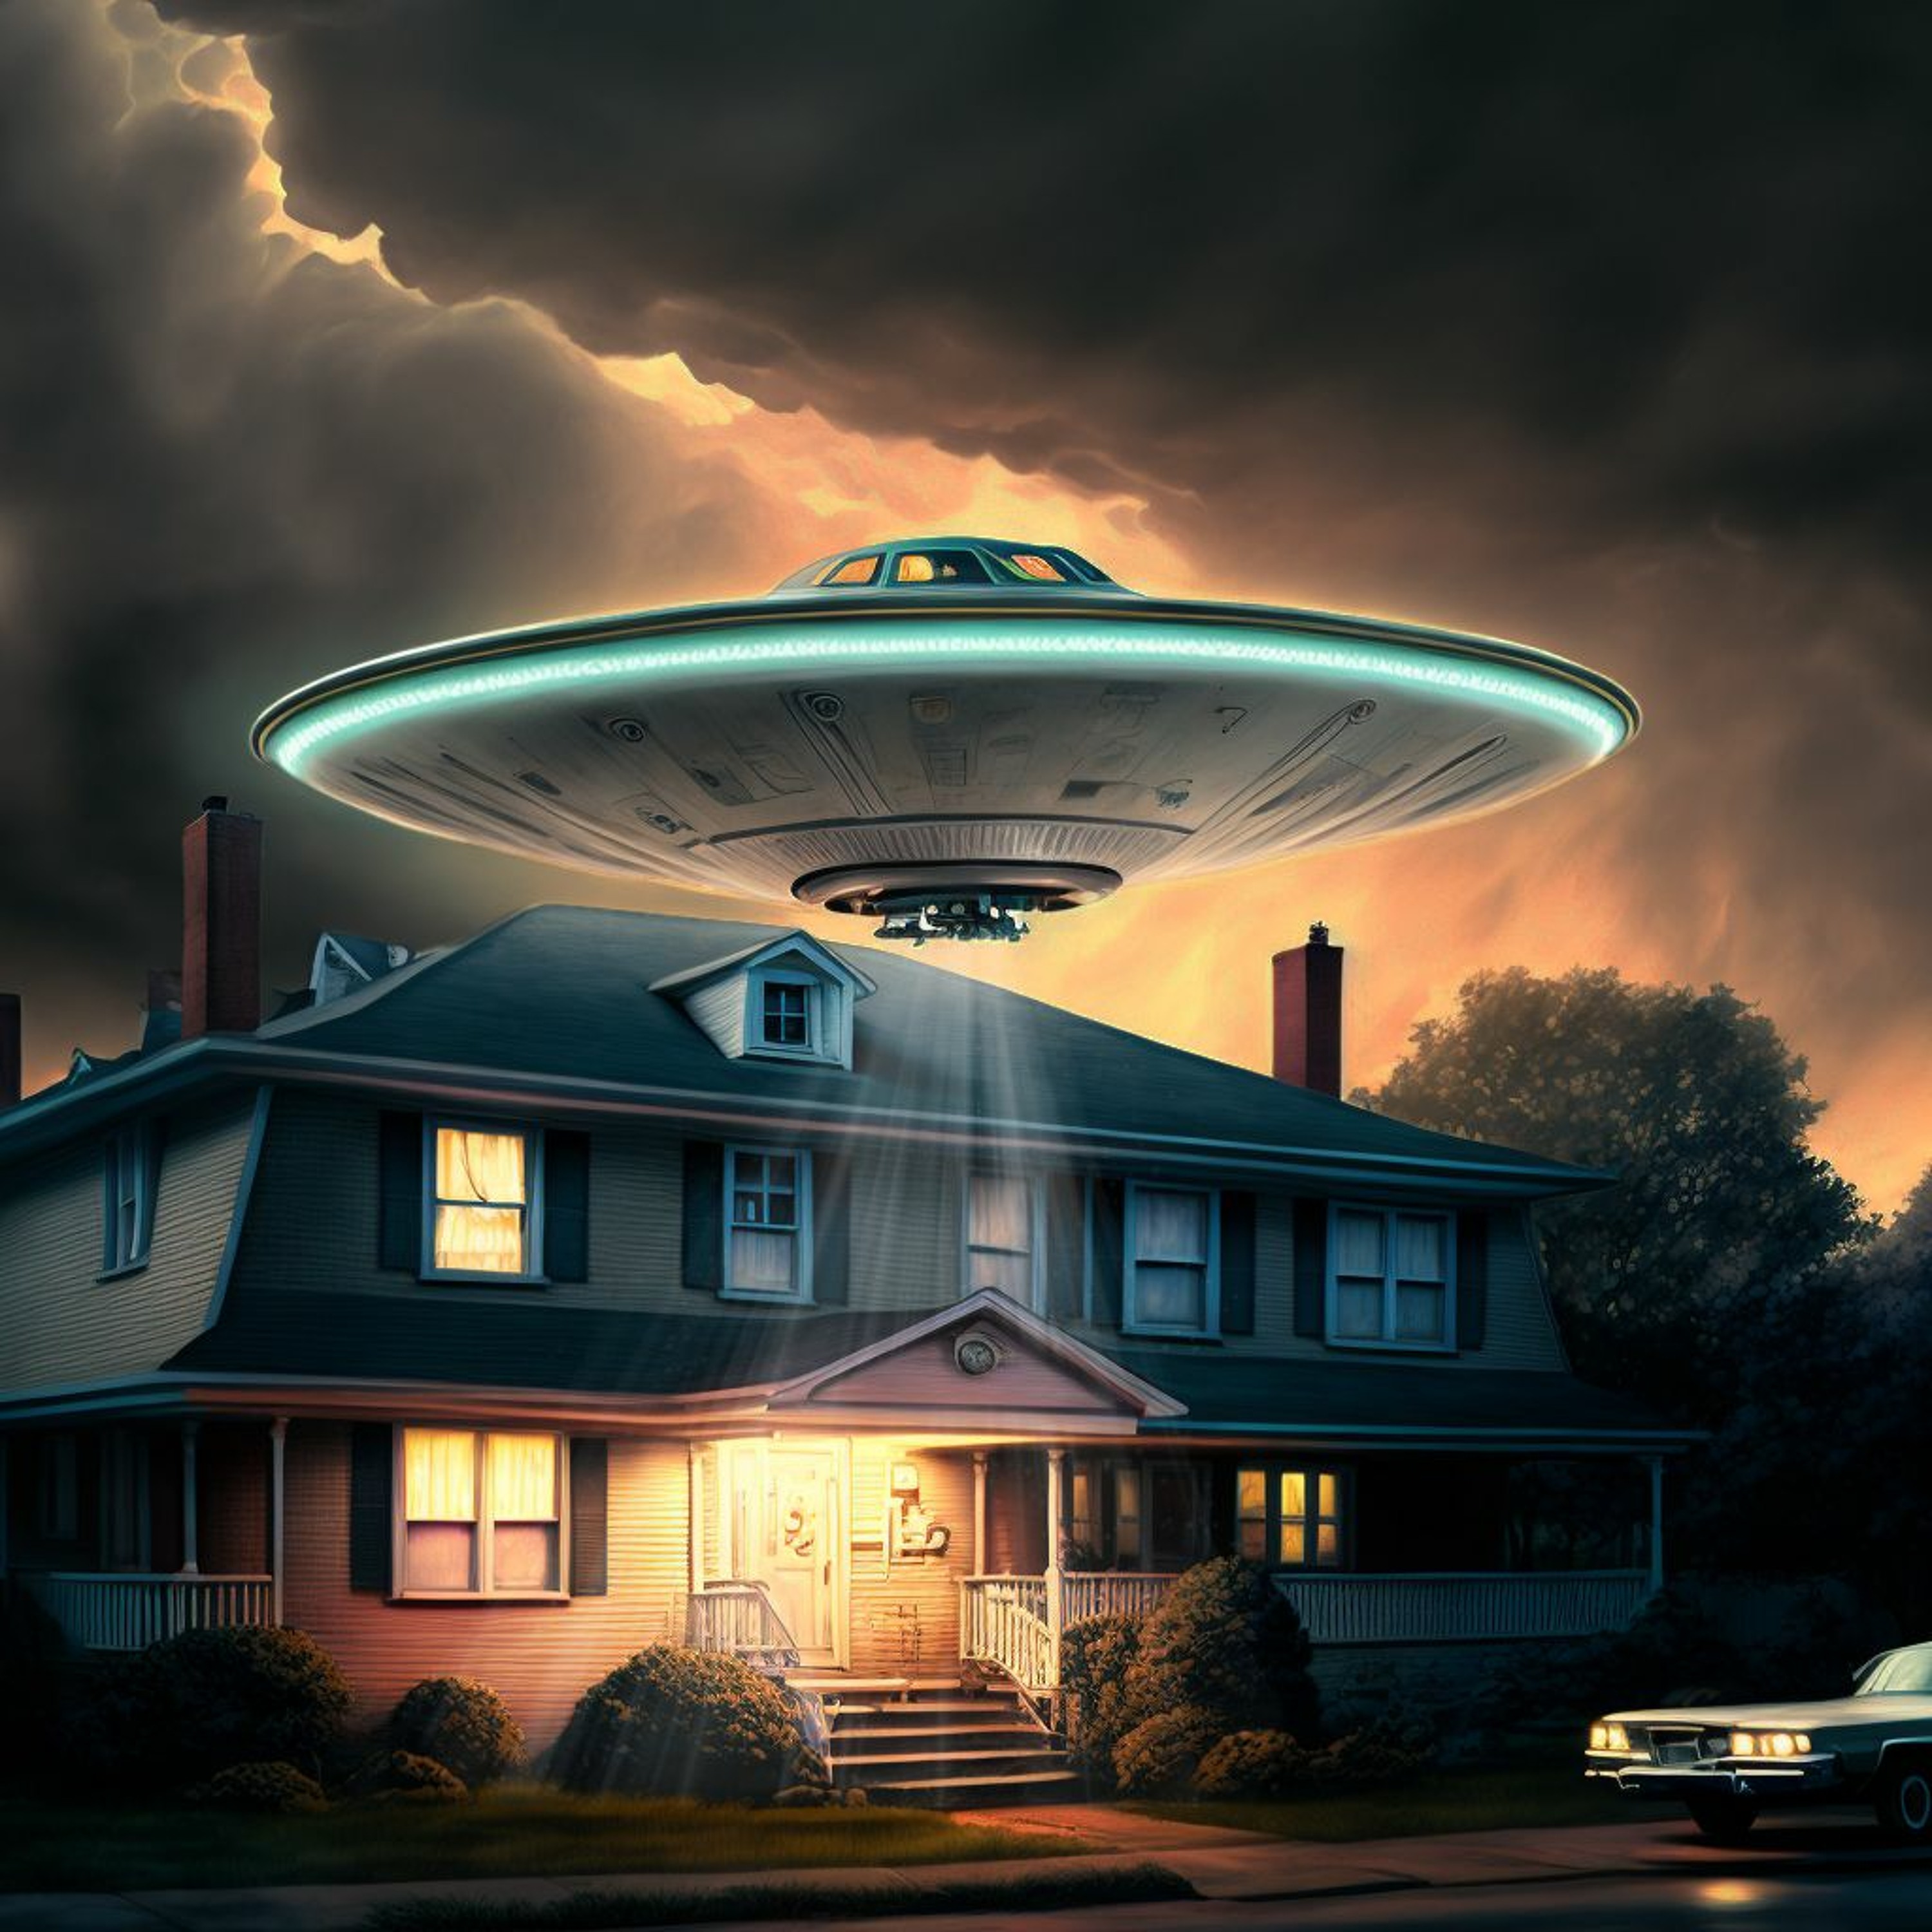 UFO-Undercover-Joe-Montaldo-Karyn-Dolan-